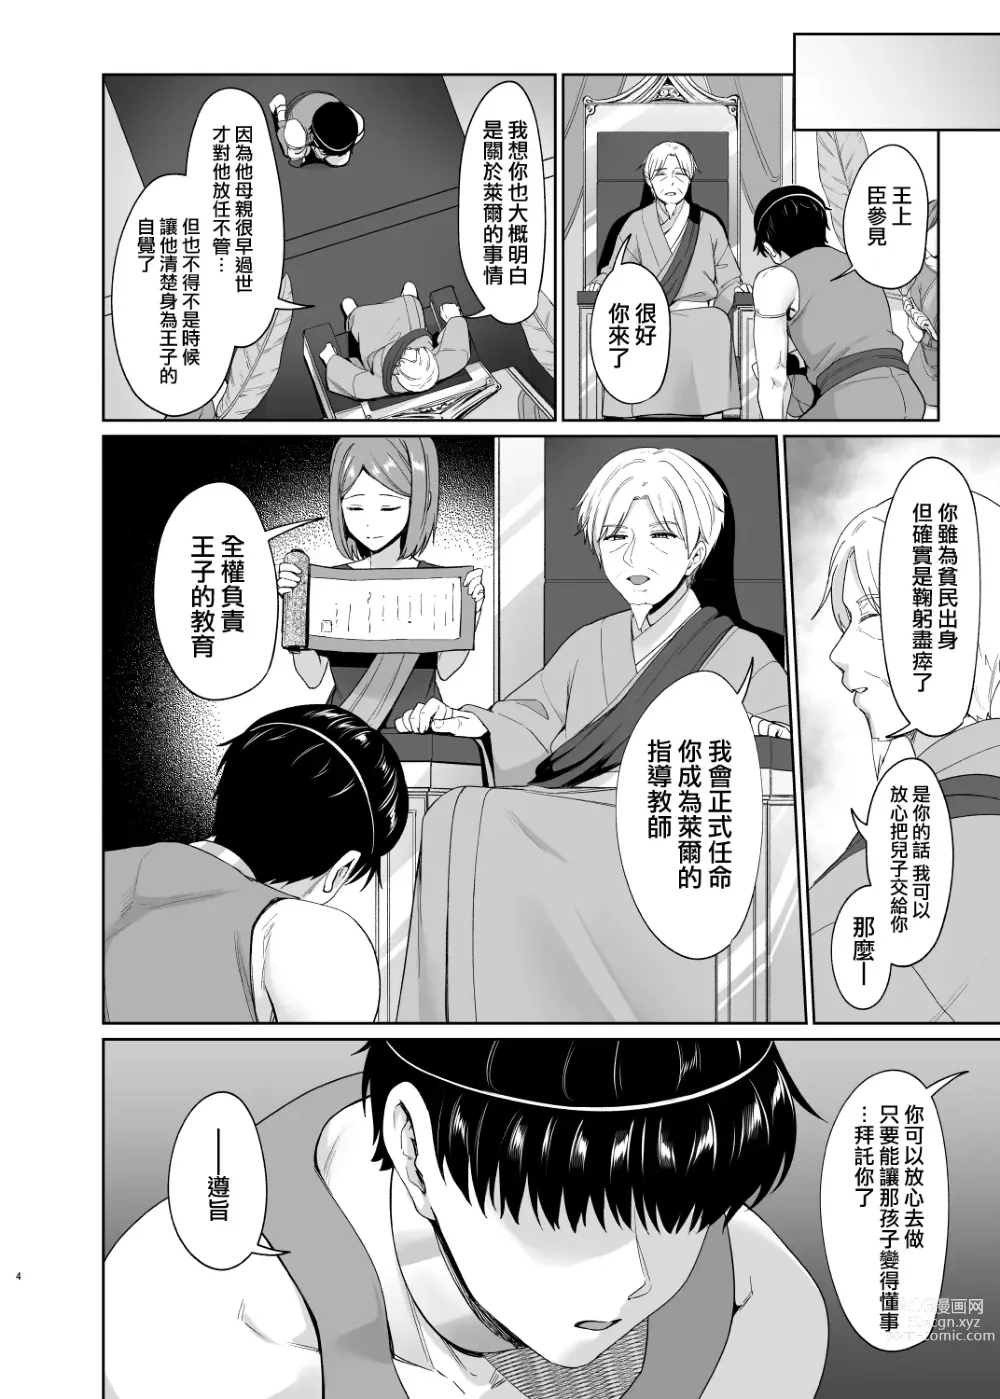 Page 6 of doujinshi Ouji no Shitsuke